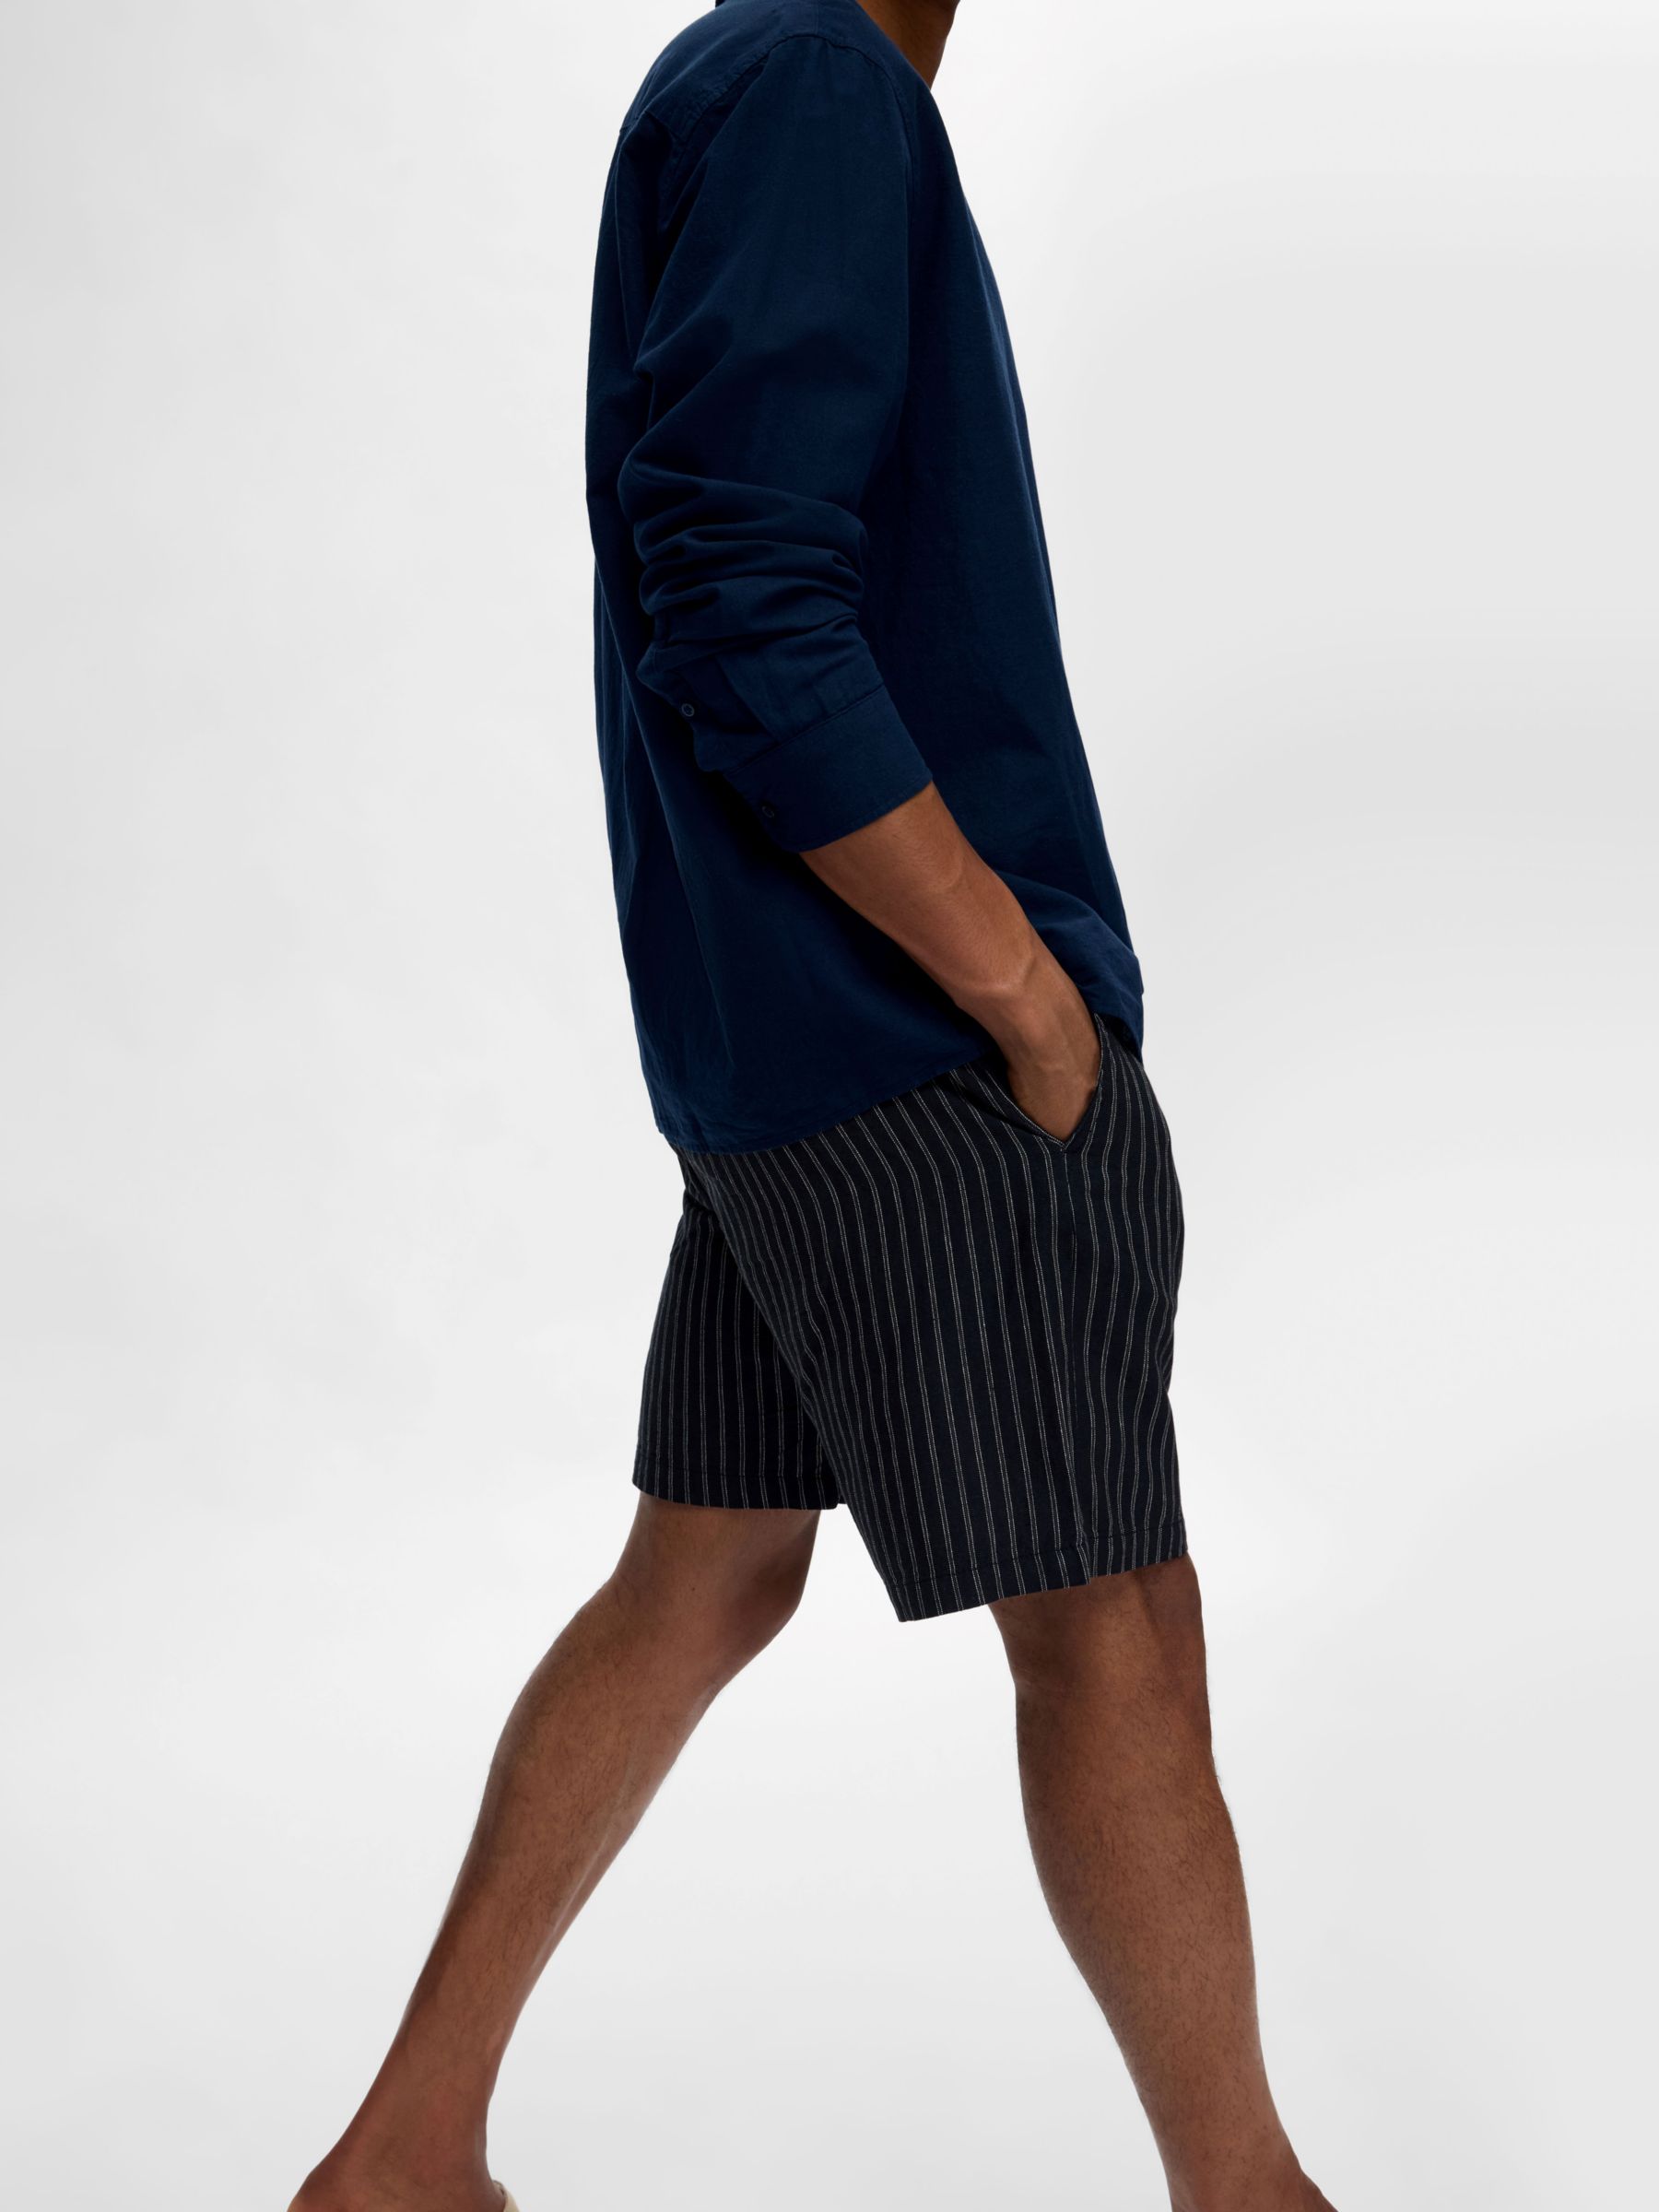 Buy SELECTED HOMME Linen Shorts, Black/Brown Online at johnlewis.com